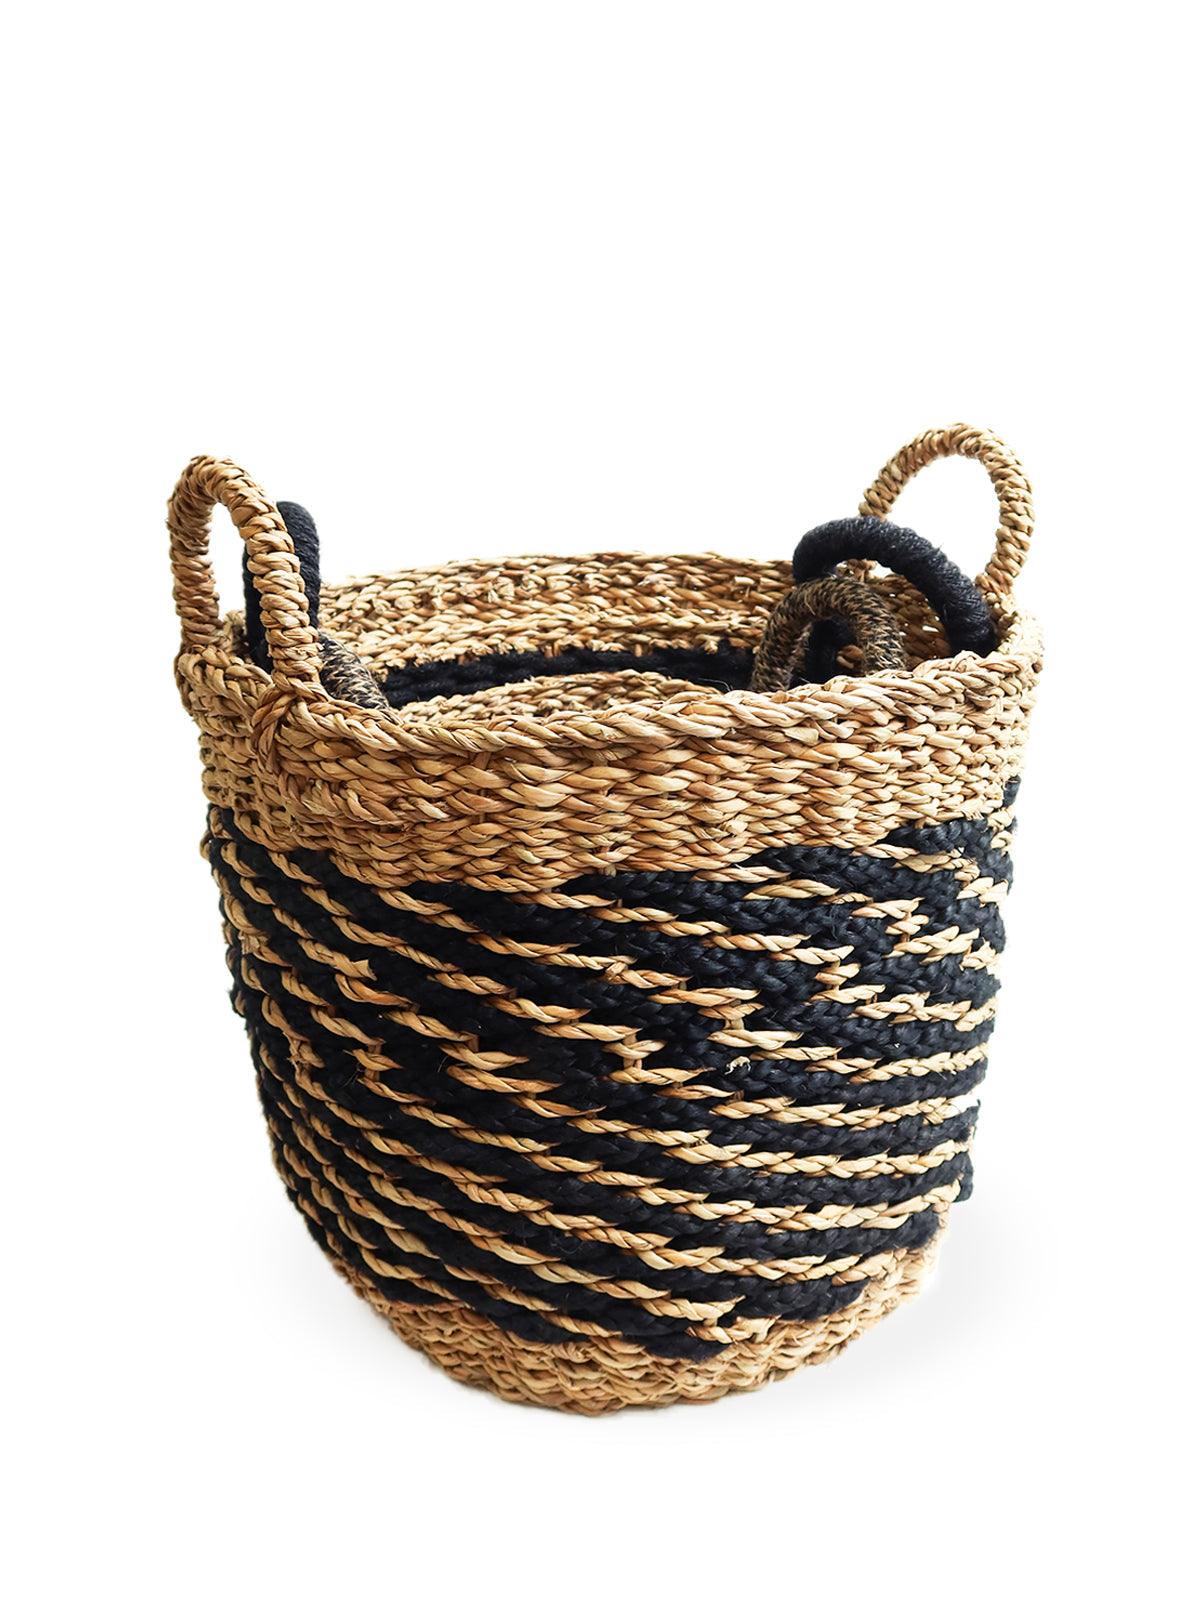 Ula Mesh Basket - Black - Plant Paradise Boutique